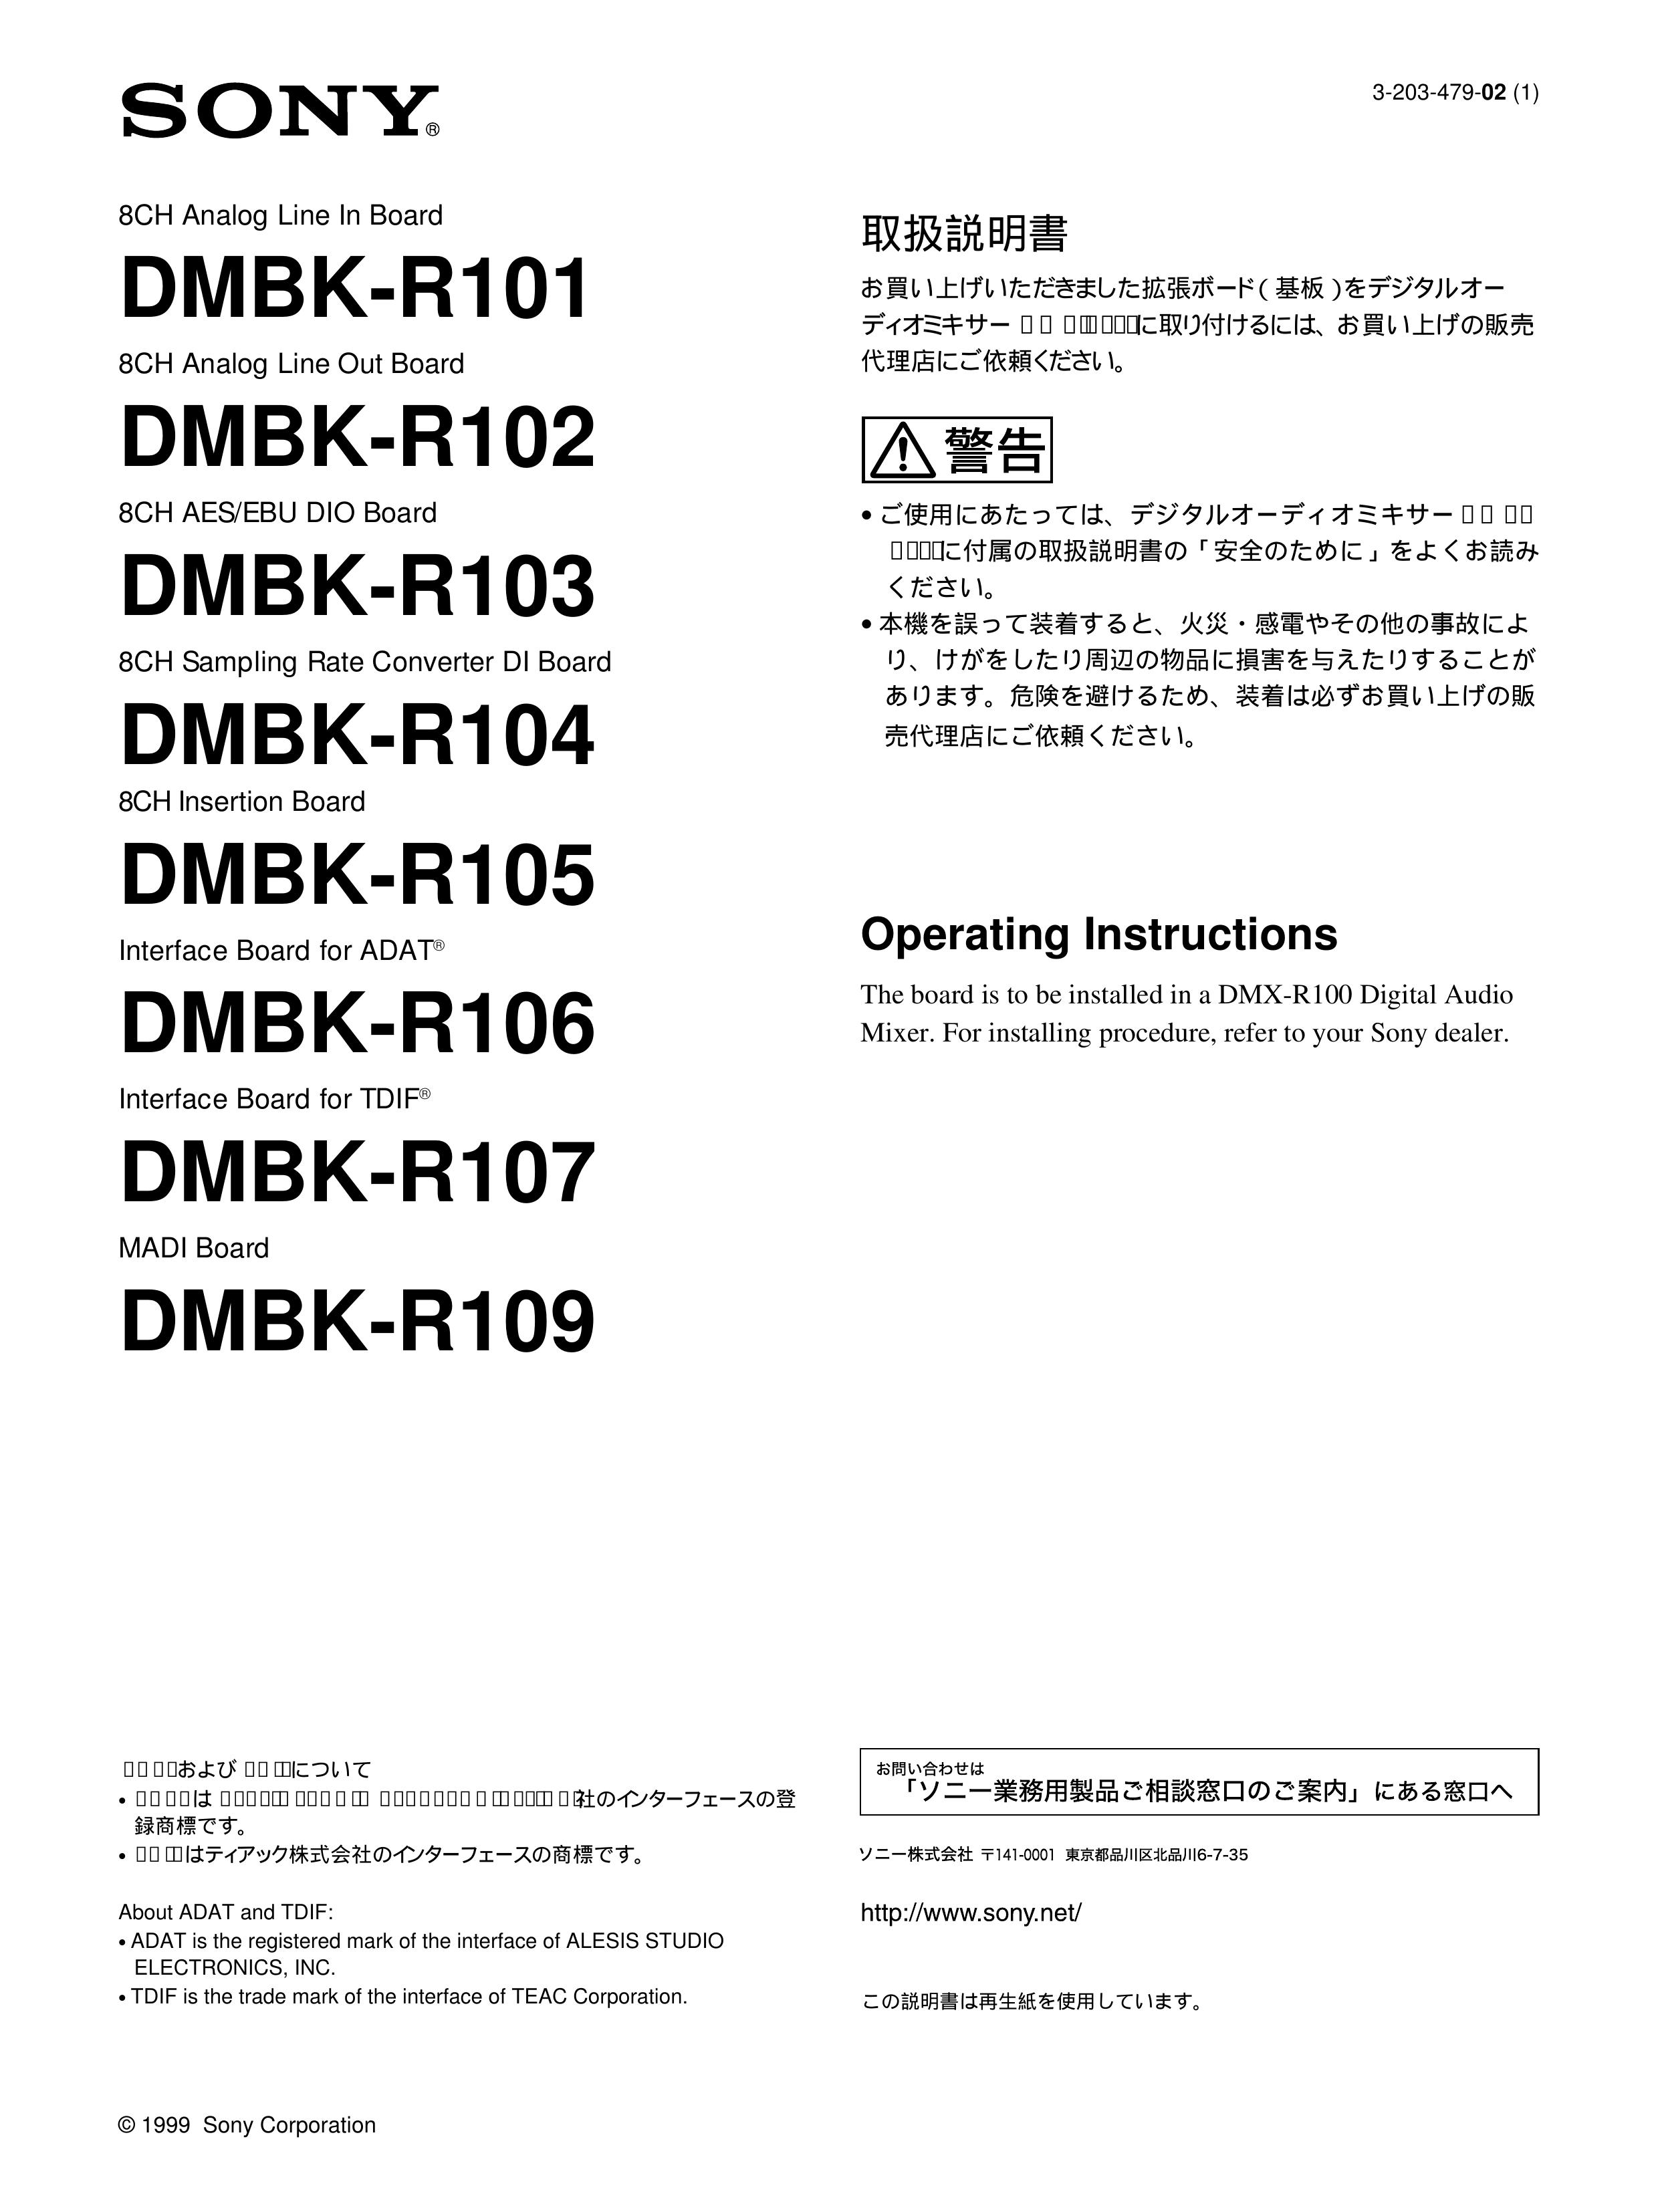 Sony DMBK-R107 Music Mixer User Manual